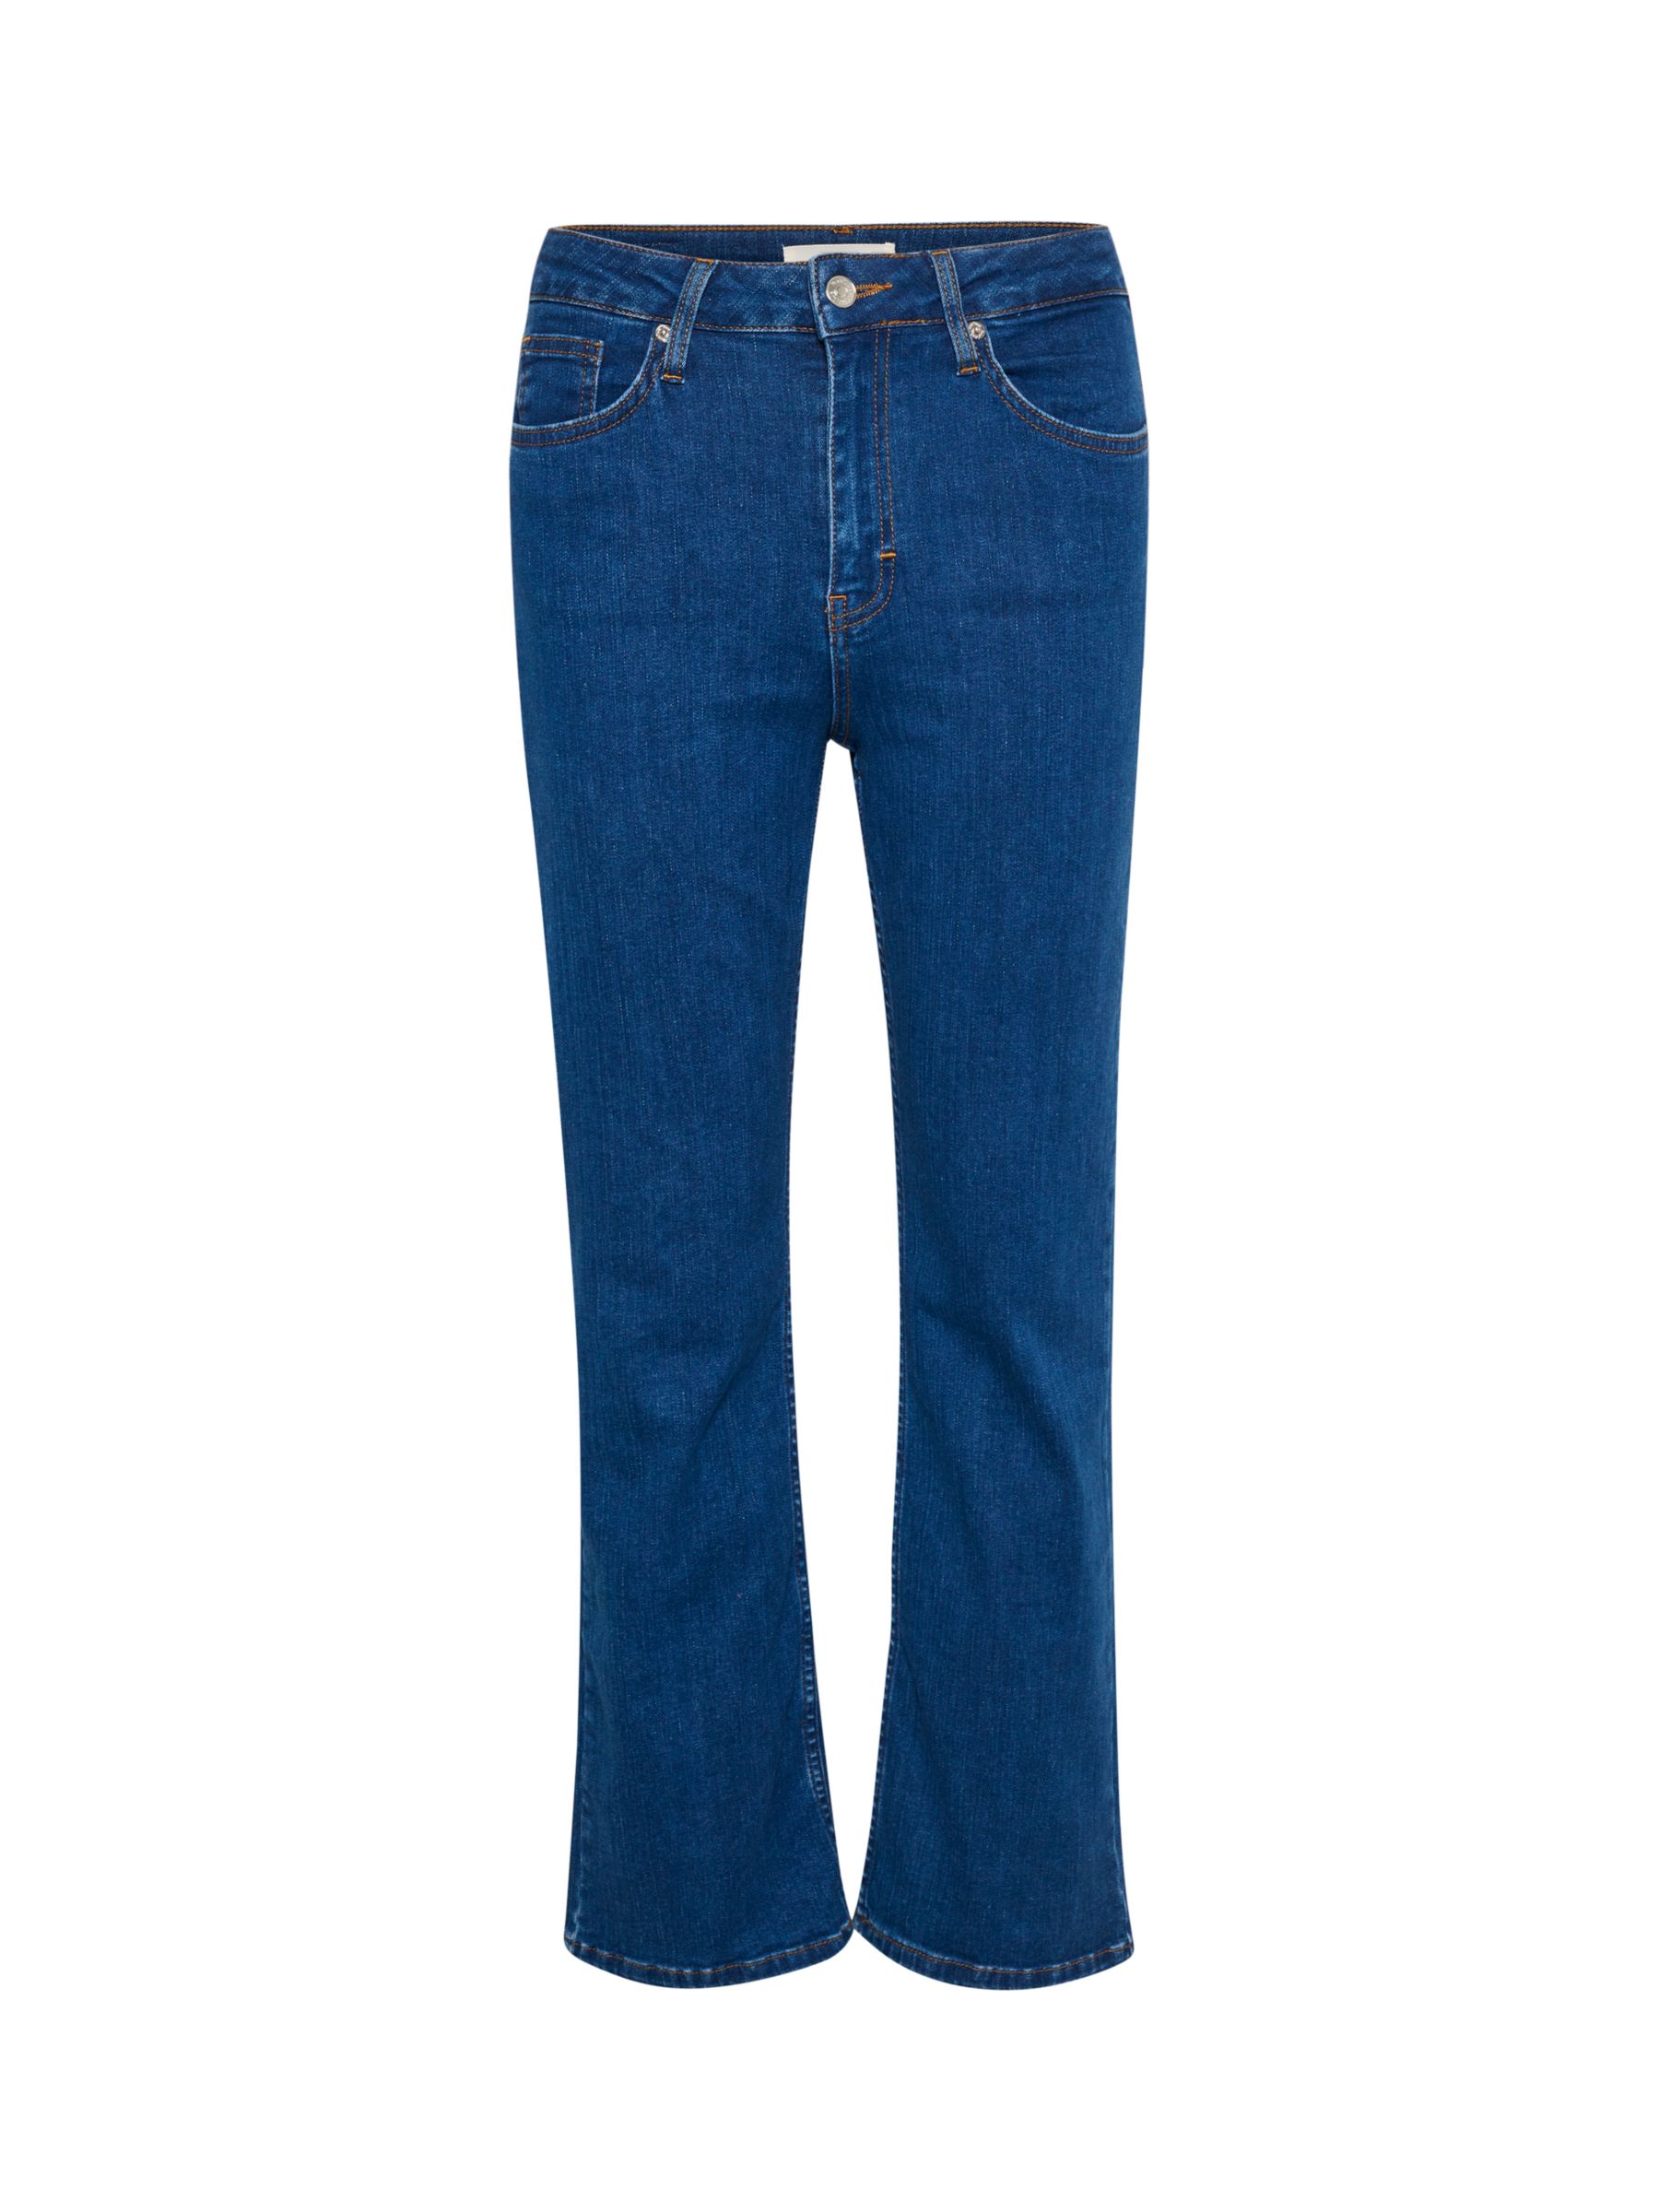 Buy Part Two Ryan Flared High Waist Jeans, Medium Blue Online at johnlewis.com